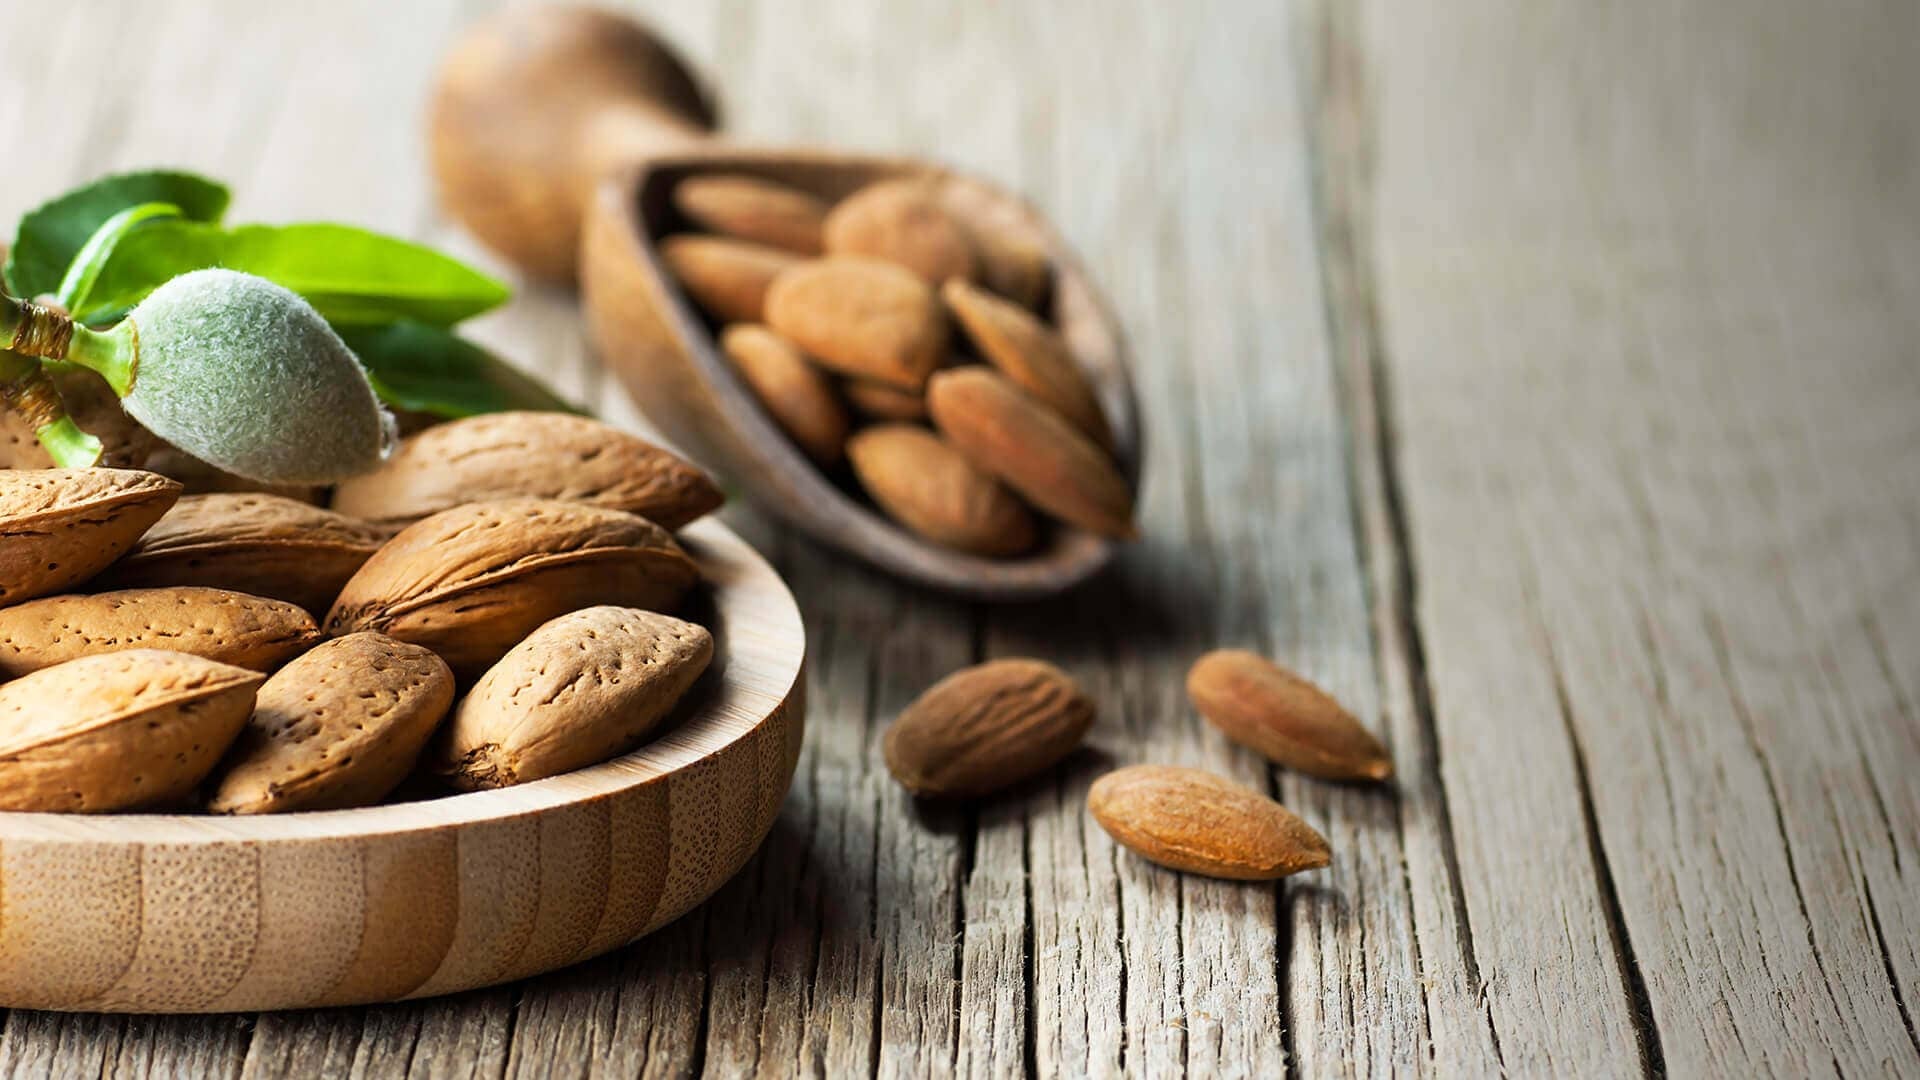 Almonds: A nut, Filled with fats, antioxidants, Prunus amygdalus. 1920x1080 Full HD Wallpaper.